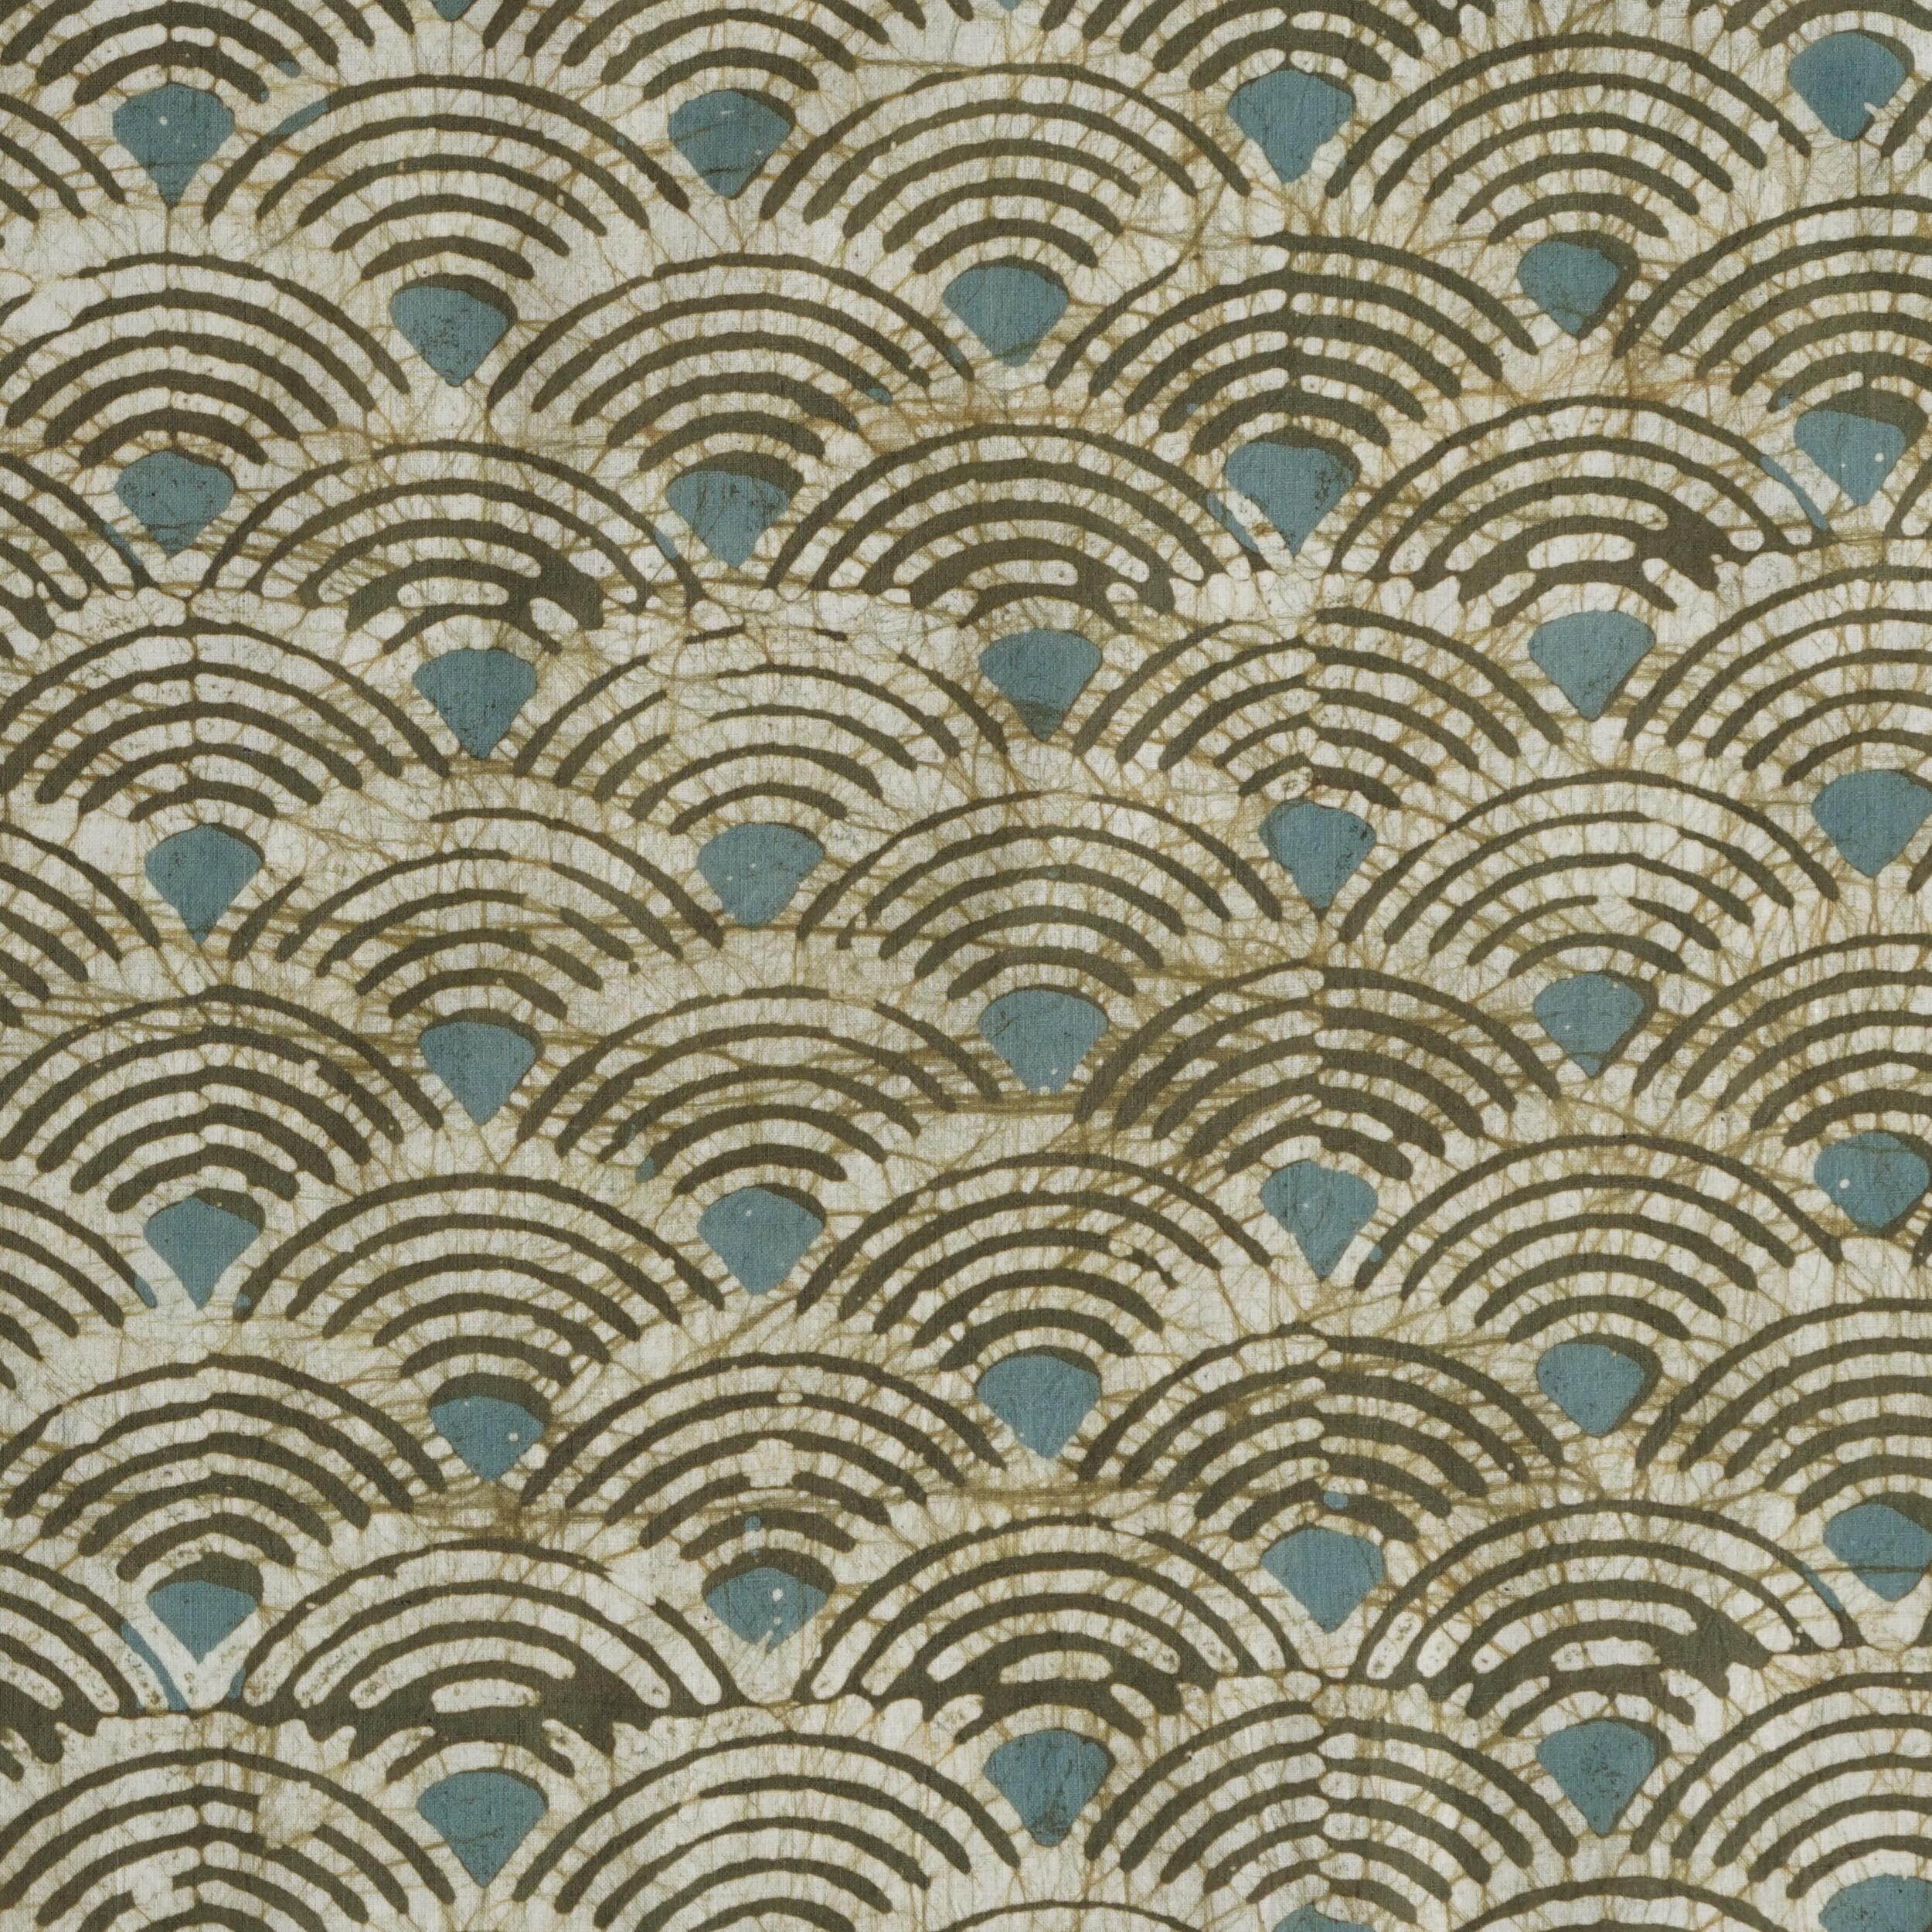 Block-Printed Batik Fabric - Cotton Cloth - Reactive Dyes - Connected Design - Flat